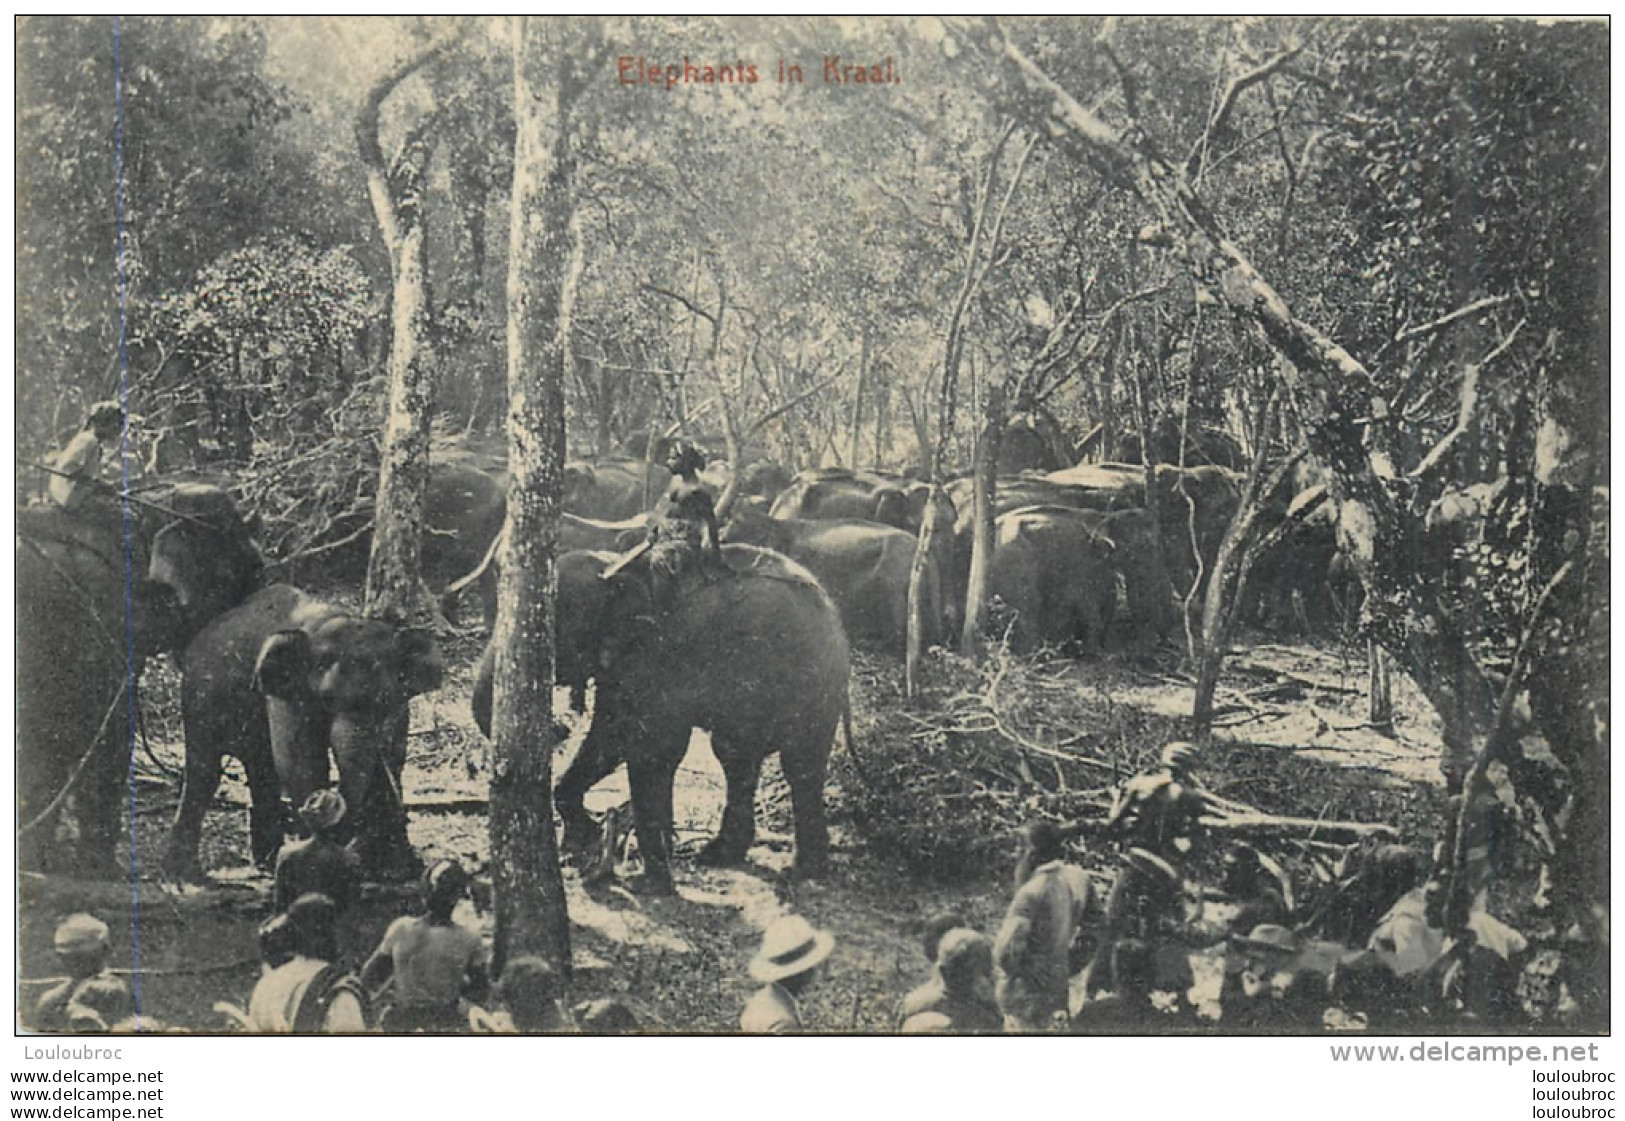 ELEPHANTS IN KRAAL - Sri Lanka (Ceylon)